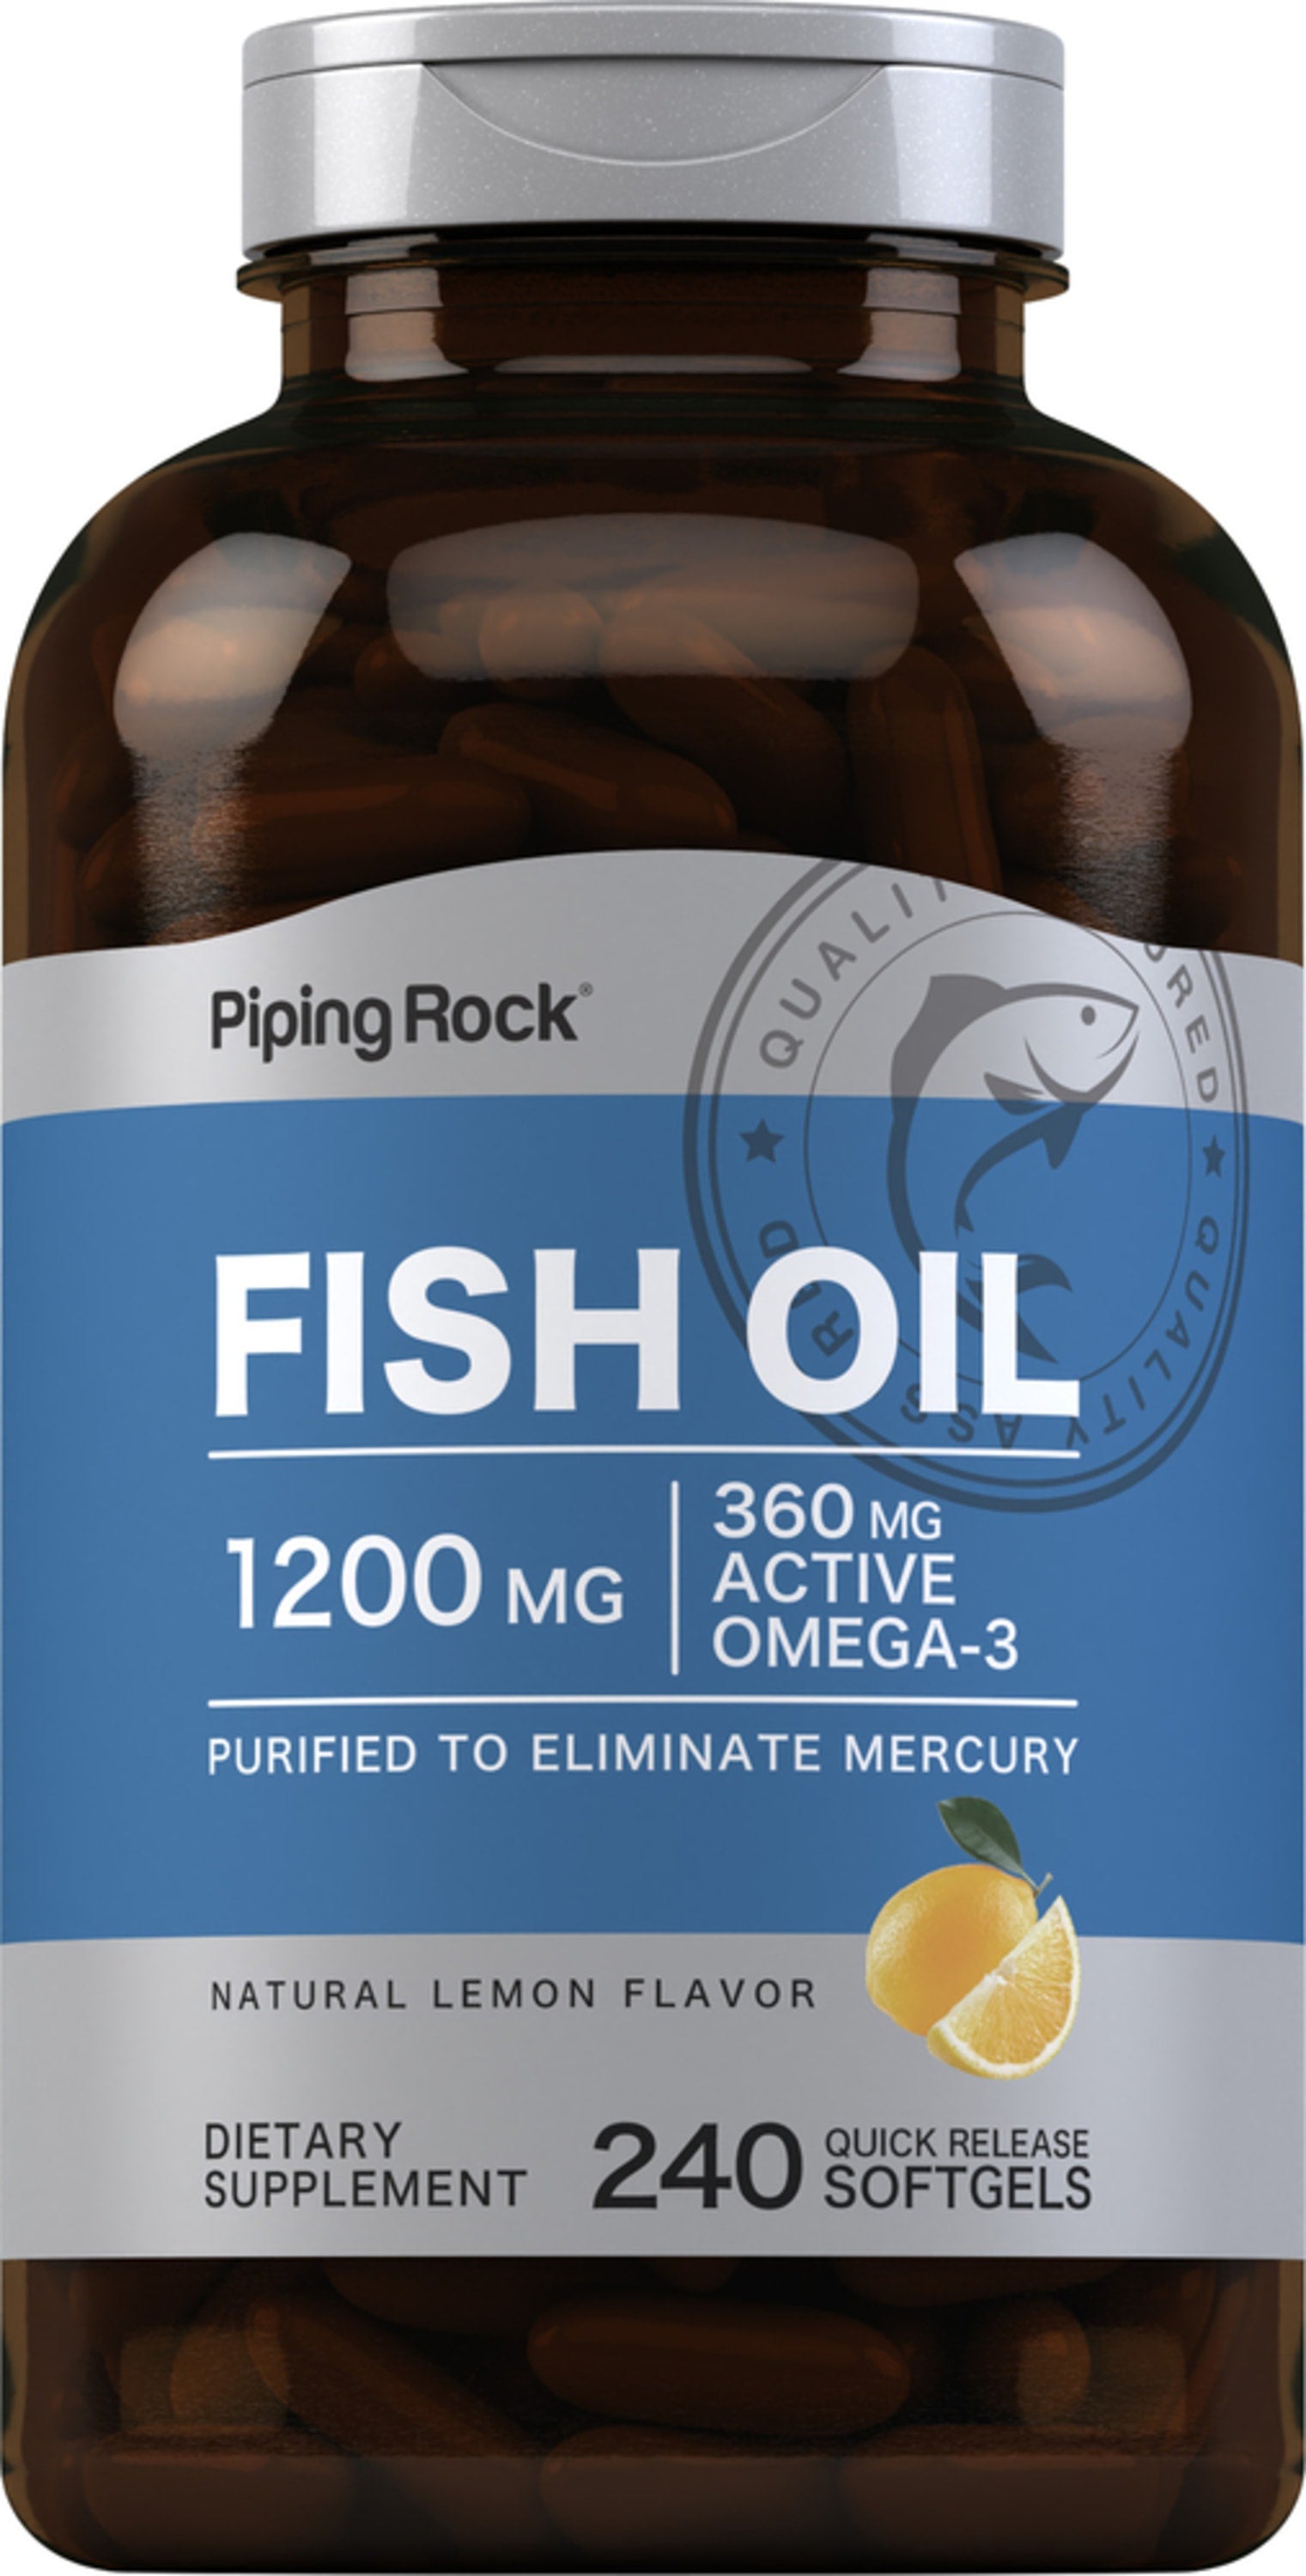 Omega-3 Fish Oil Lemon Flavor, 1200 mg, 240 Quick Release Softgels